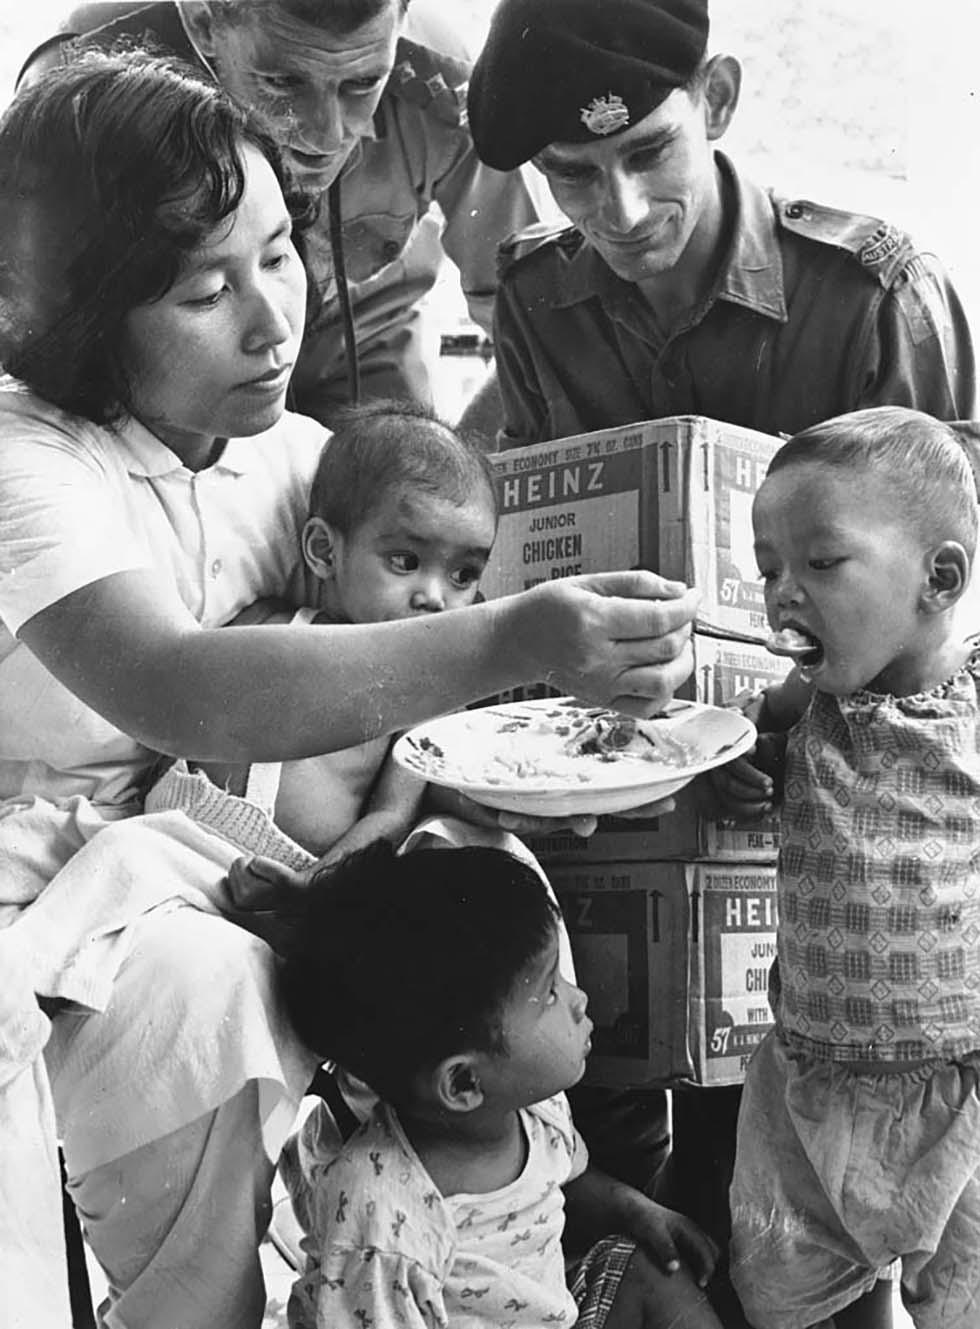 Australian soldiers in Vietnam providing civilian food aid